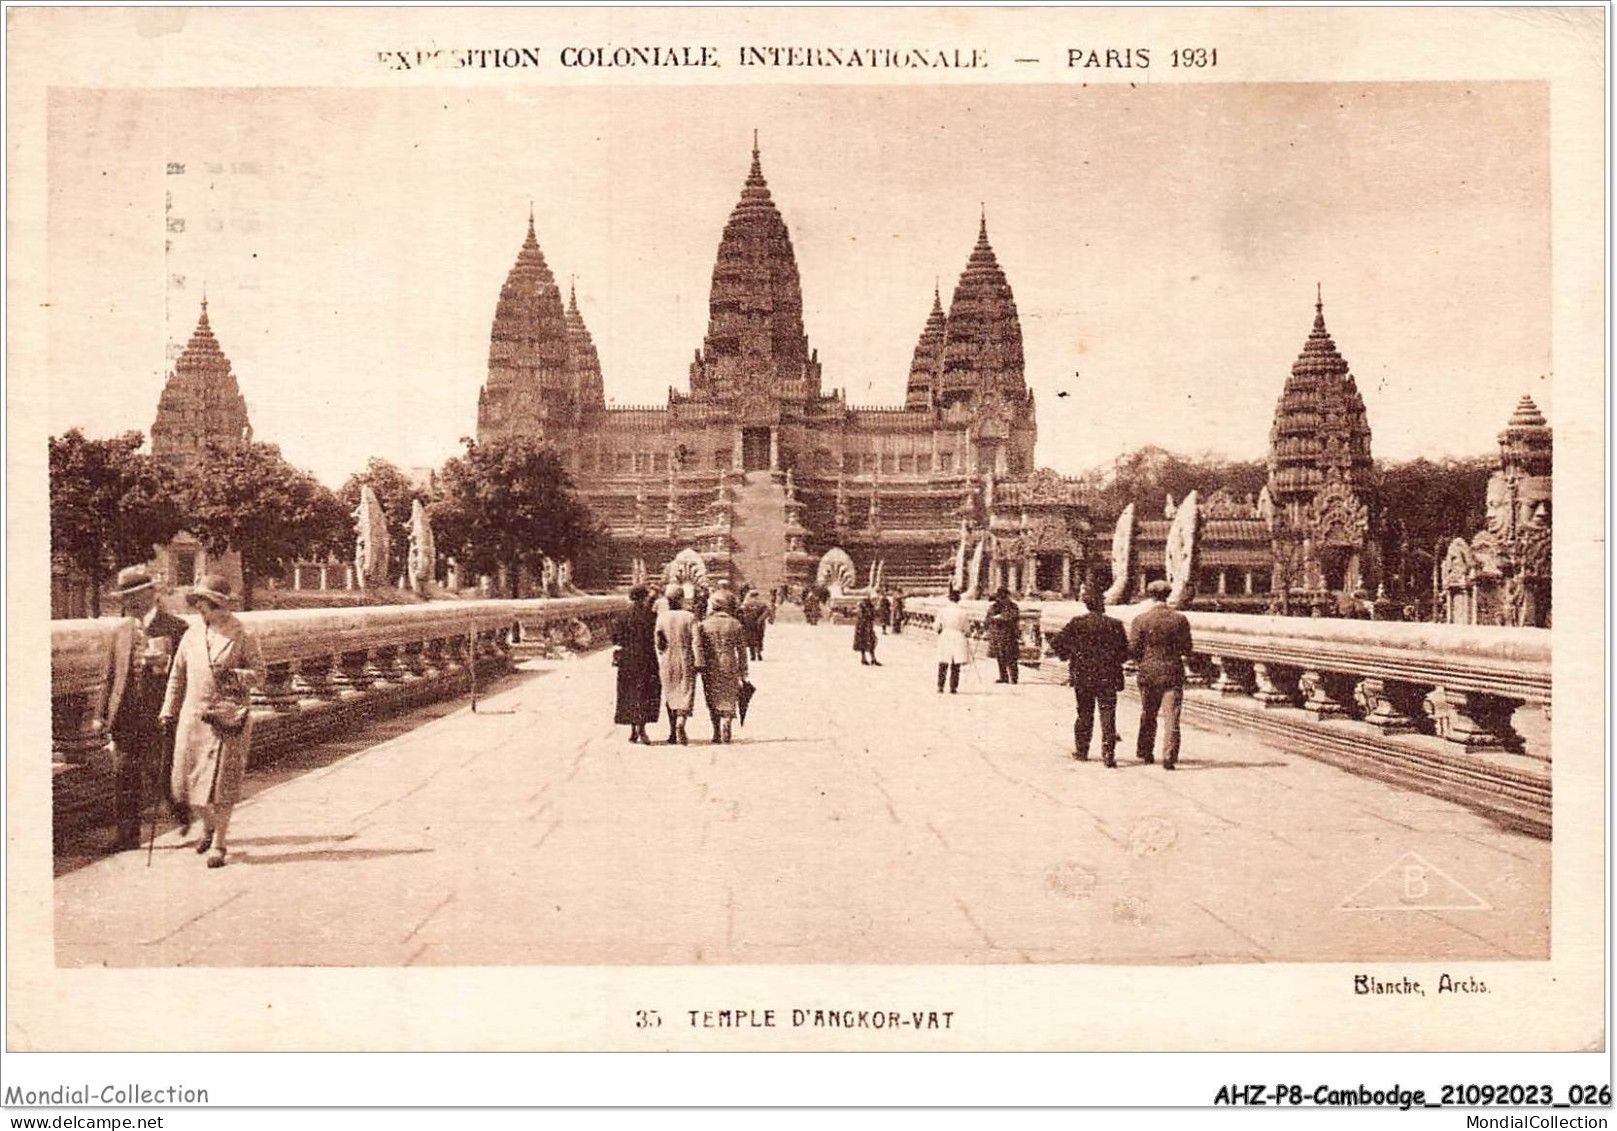 AHZP8-CAMBODGE-0696 - EXPOSITION COLONIALE INTERNATIONALE - PARIS 1931 - TEMPLE D'ANGKOR-VAT - Cambodia